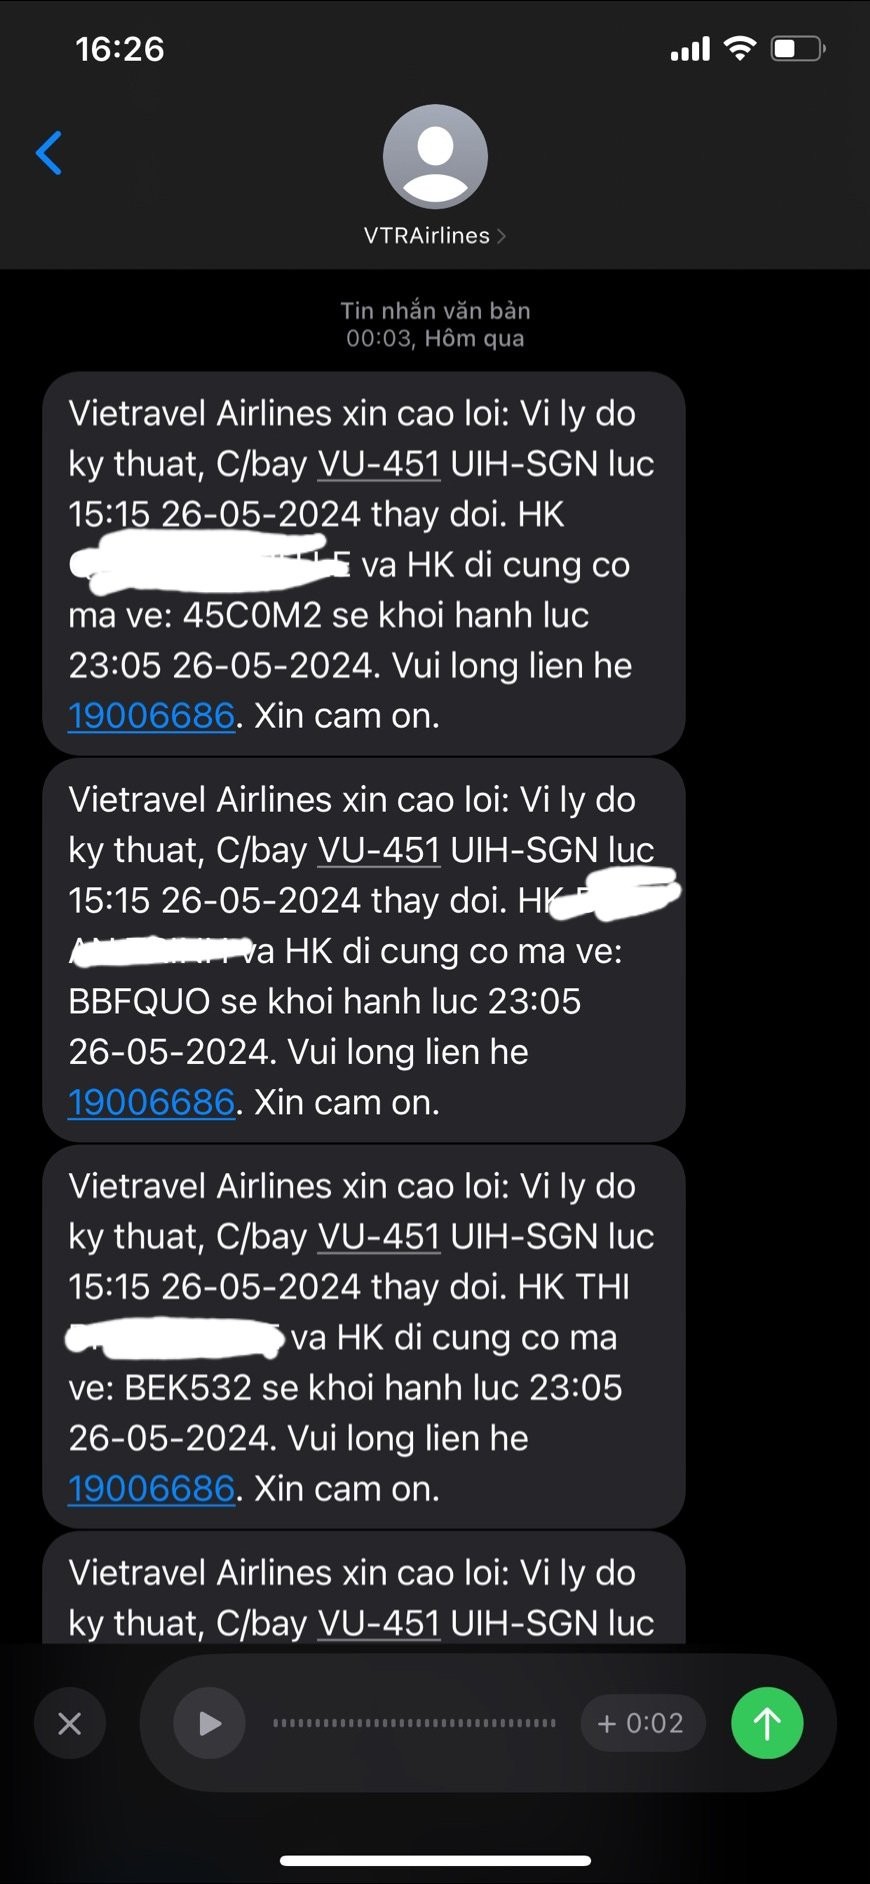 viettravel-airlines-cham-chuyen-thong-bao-lan1-1716984343.jpg